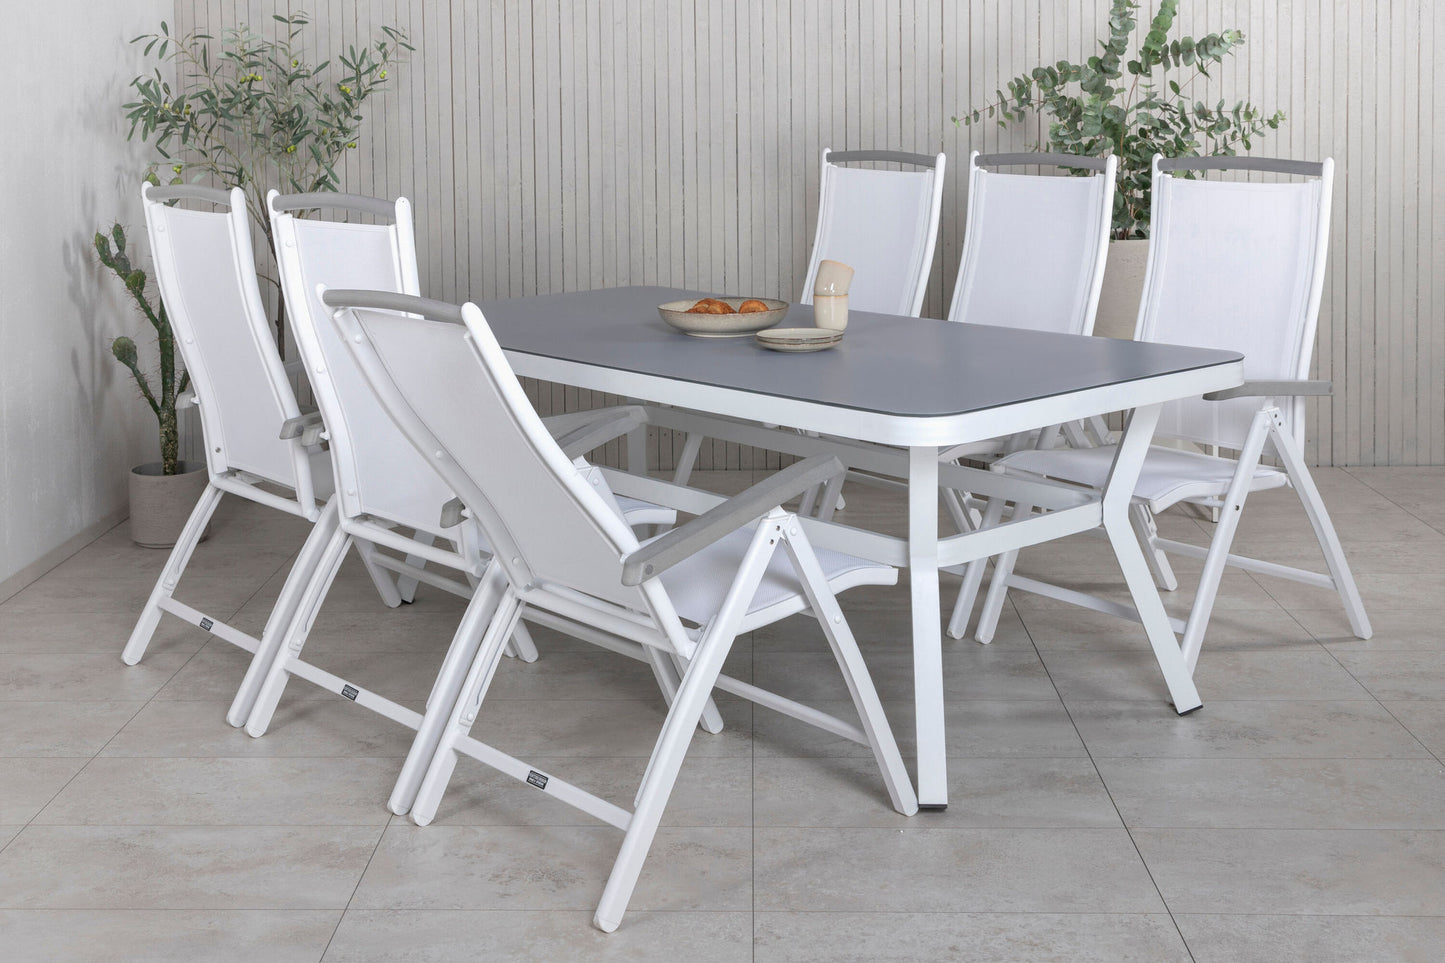 Virya - Spisebord, Hvid Alu / Grå glas - big table+Albany 5:pos Stol - Hvid Aluminium/hvid tekstil/aittræ